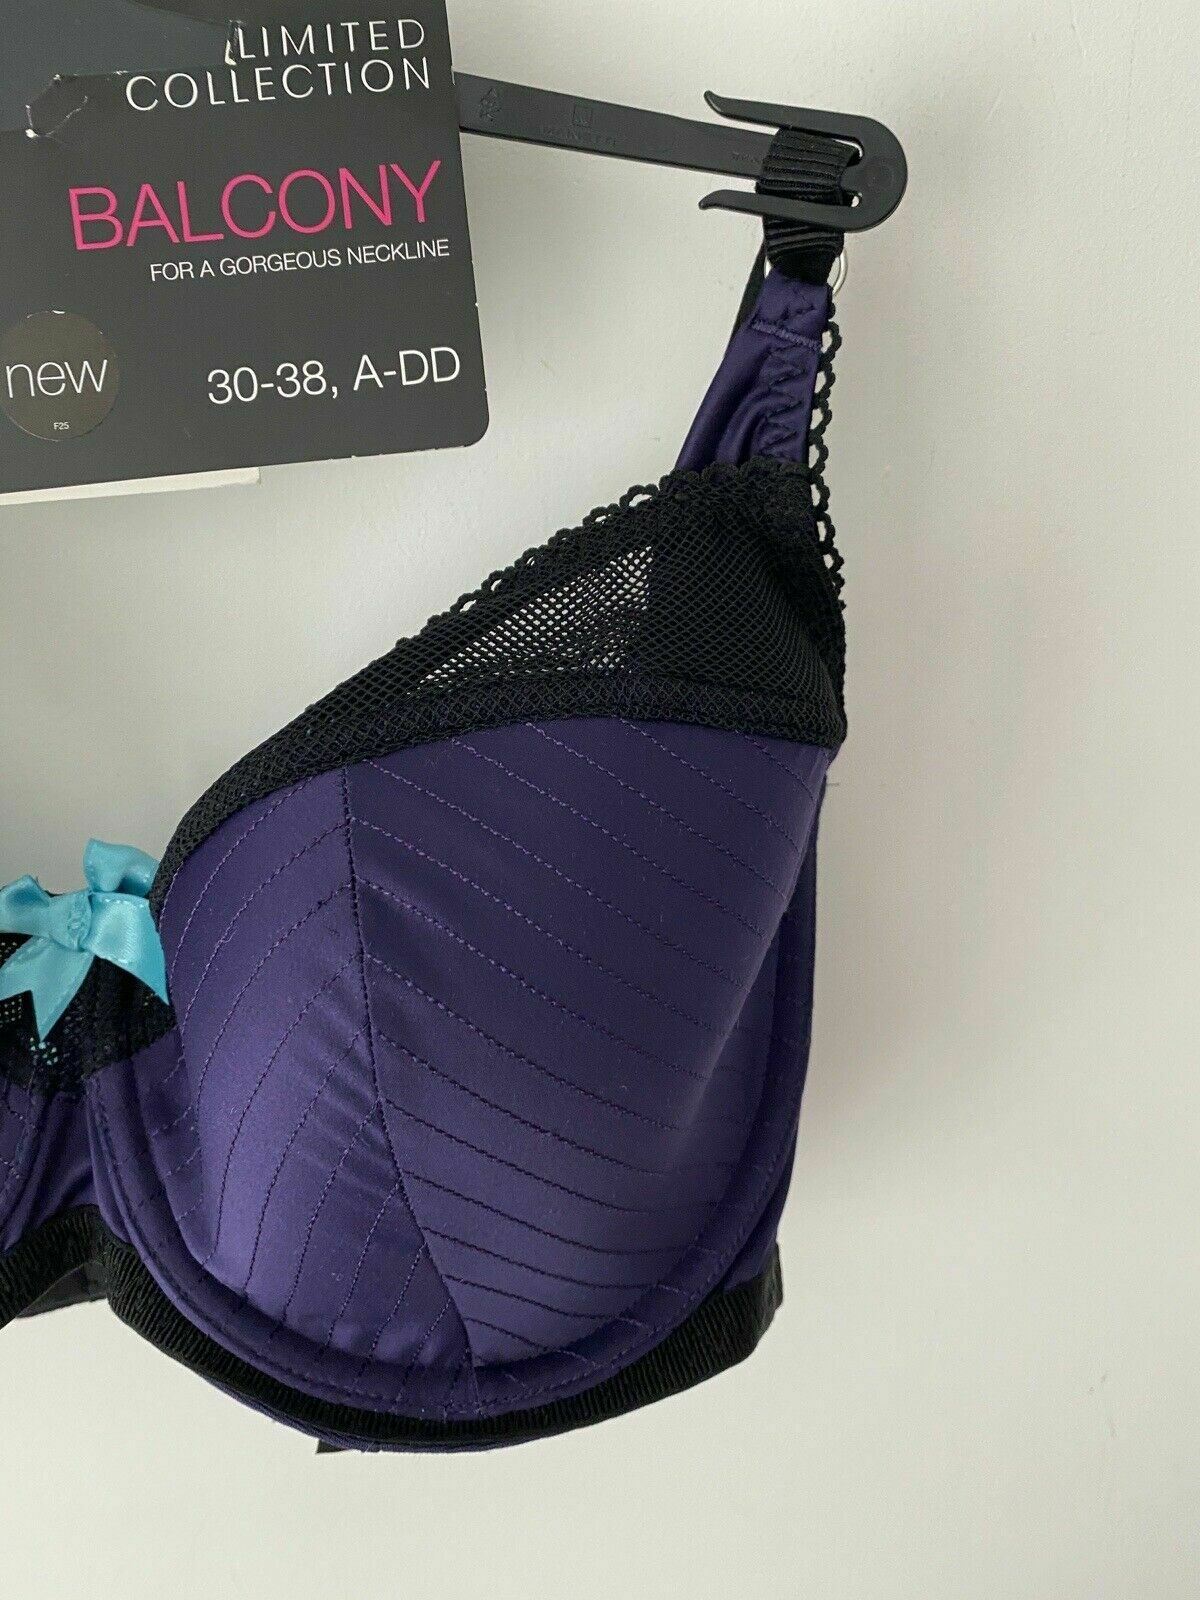 M&S Limited Collection Balcony Bra Purple Black RRP £18 34D, 36D, 32DD, 34DD